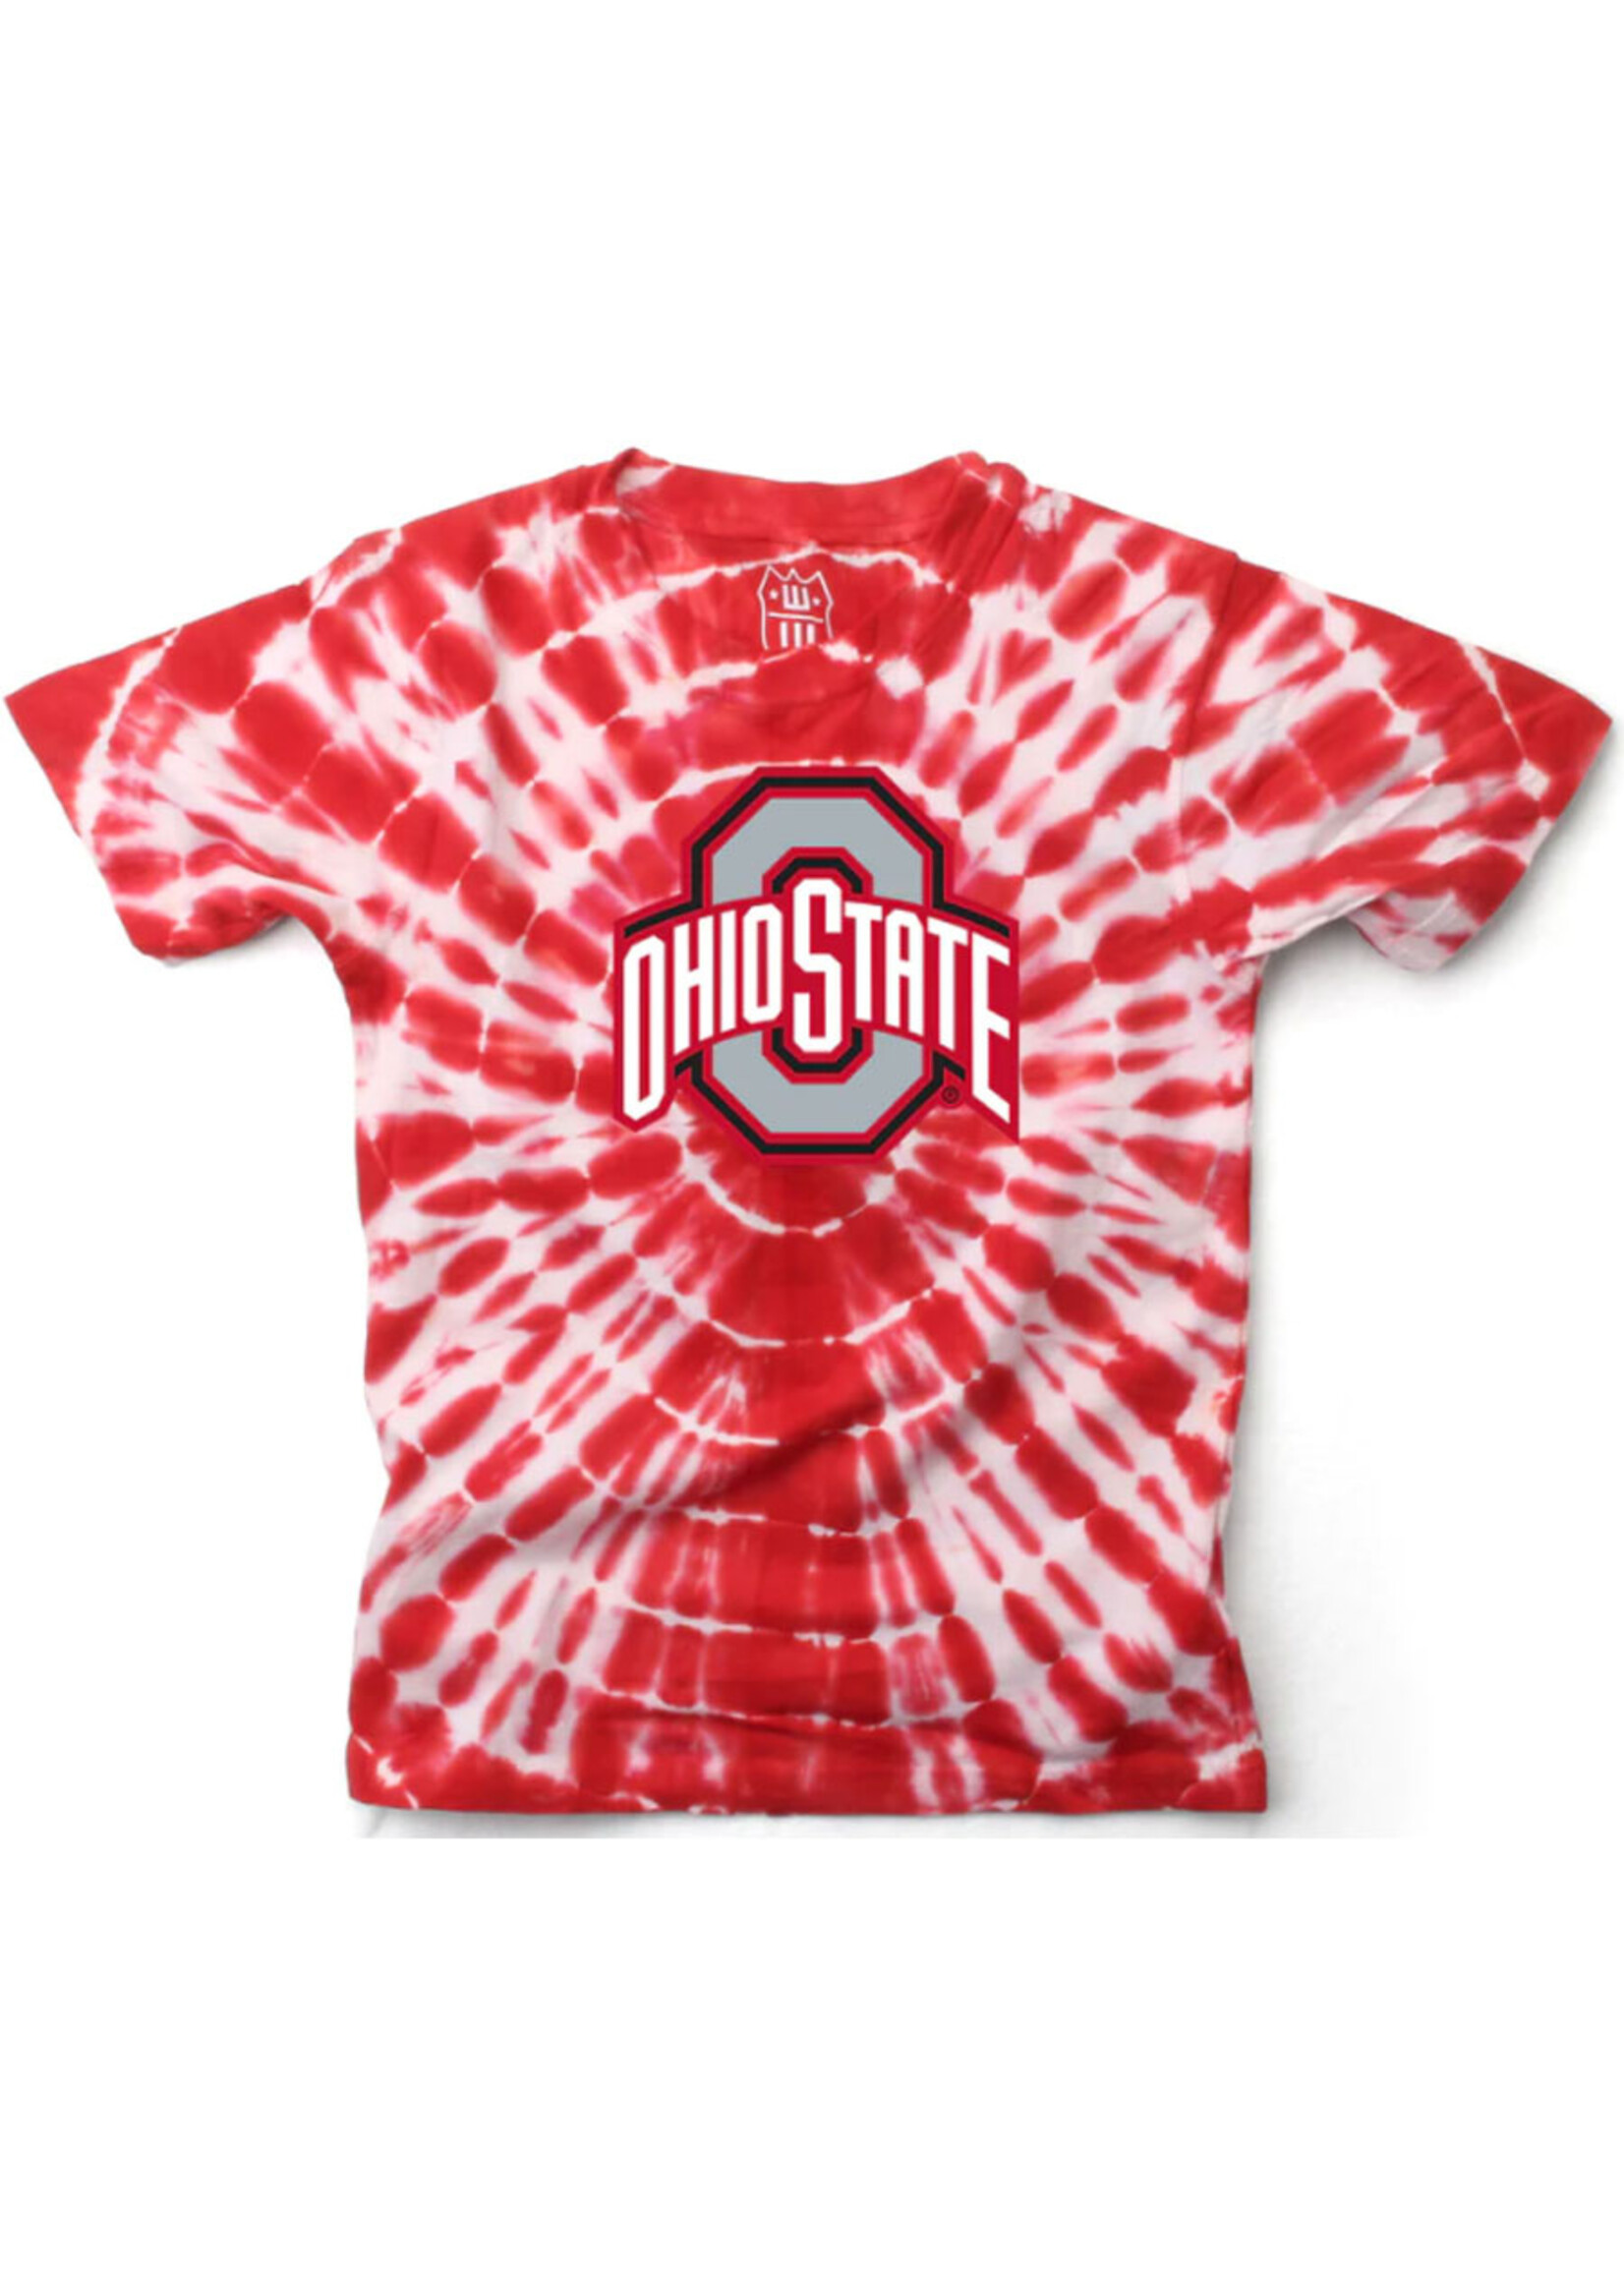 Ohio State Buckeyes Youth Tie Dye T-Shirt